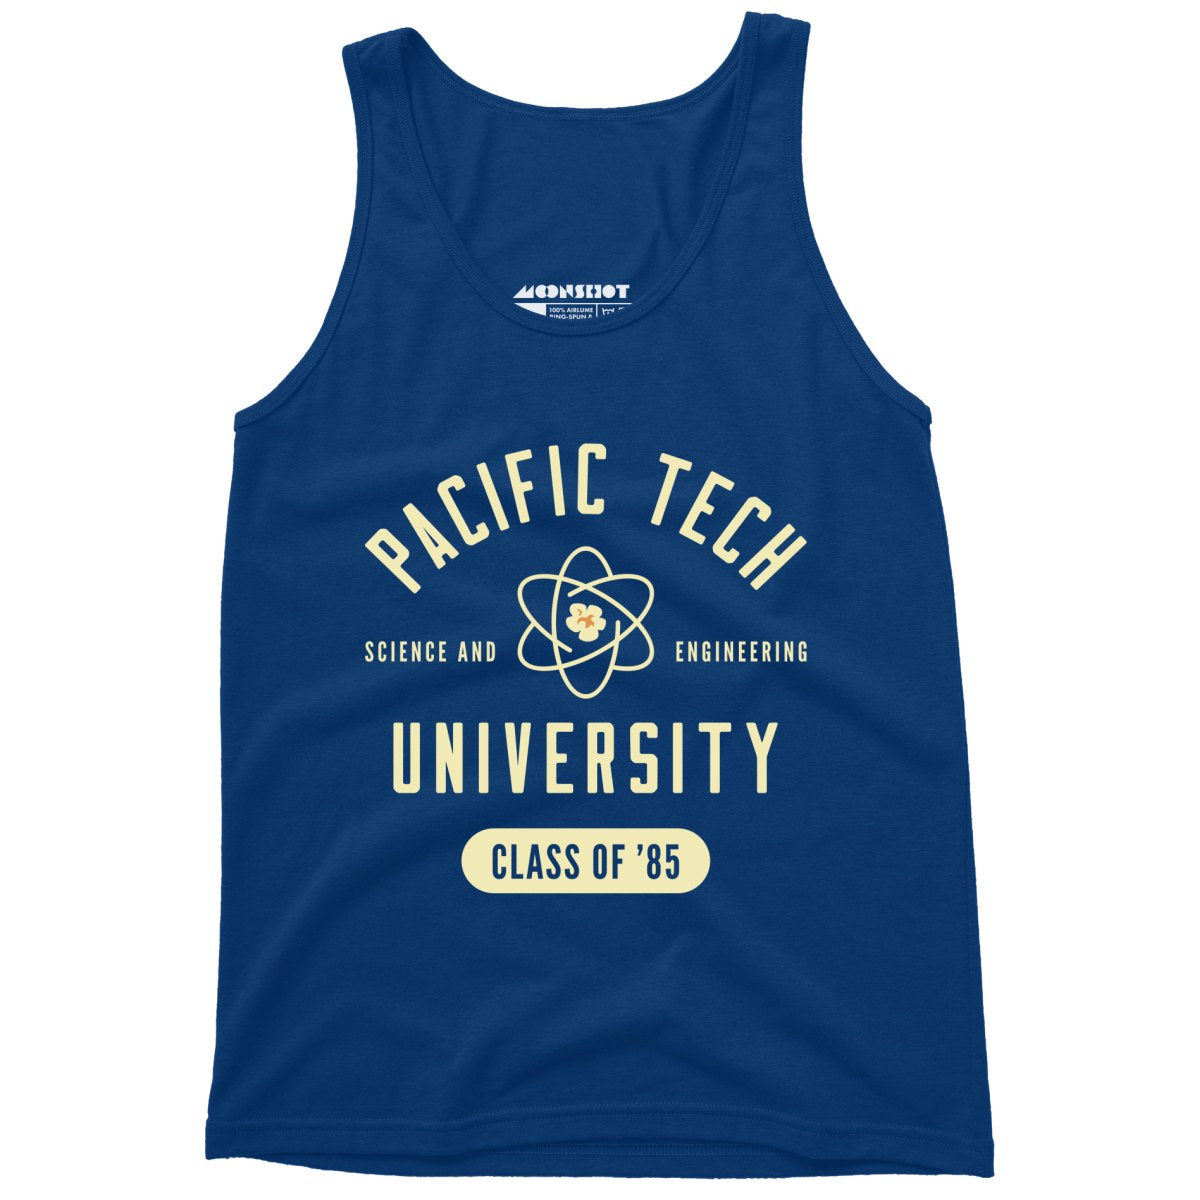 Real Genius - Pacific Tech University - Unisex Tank Top